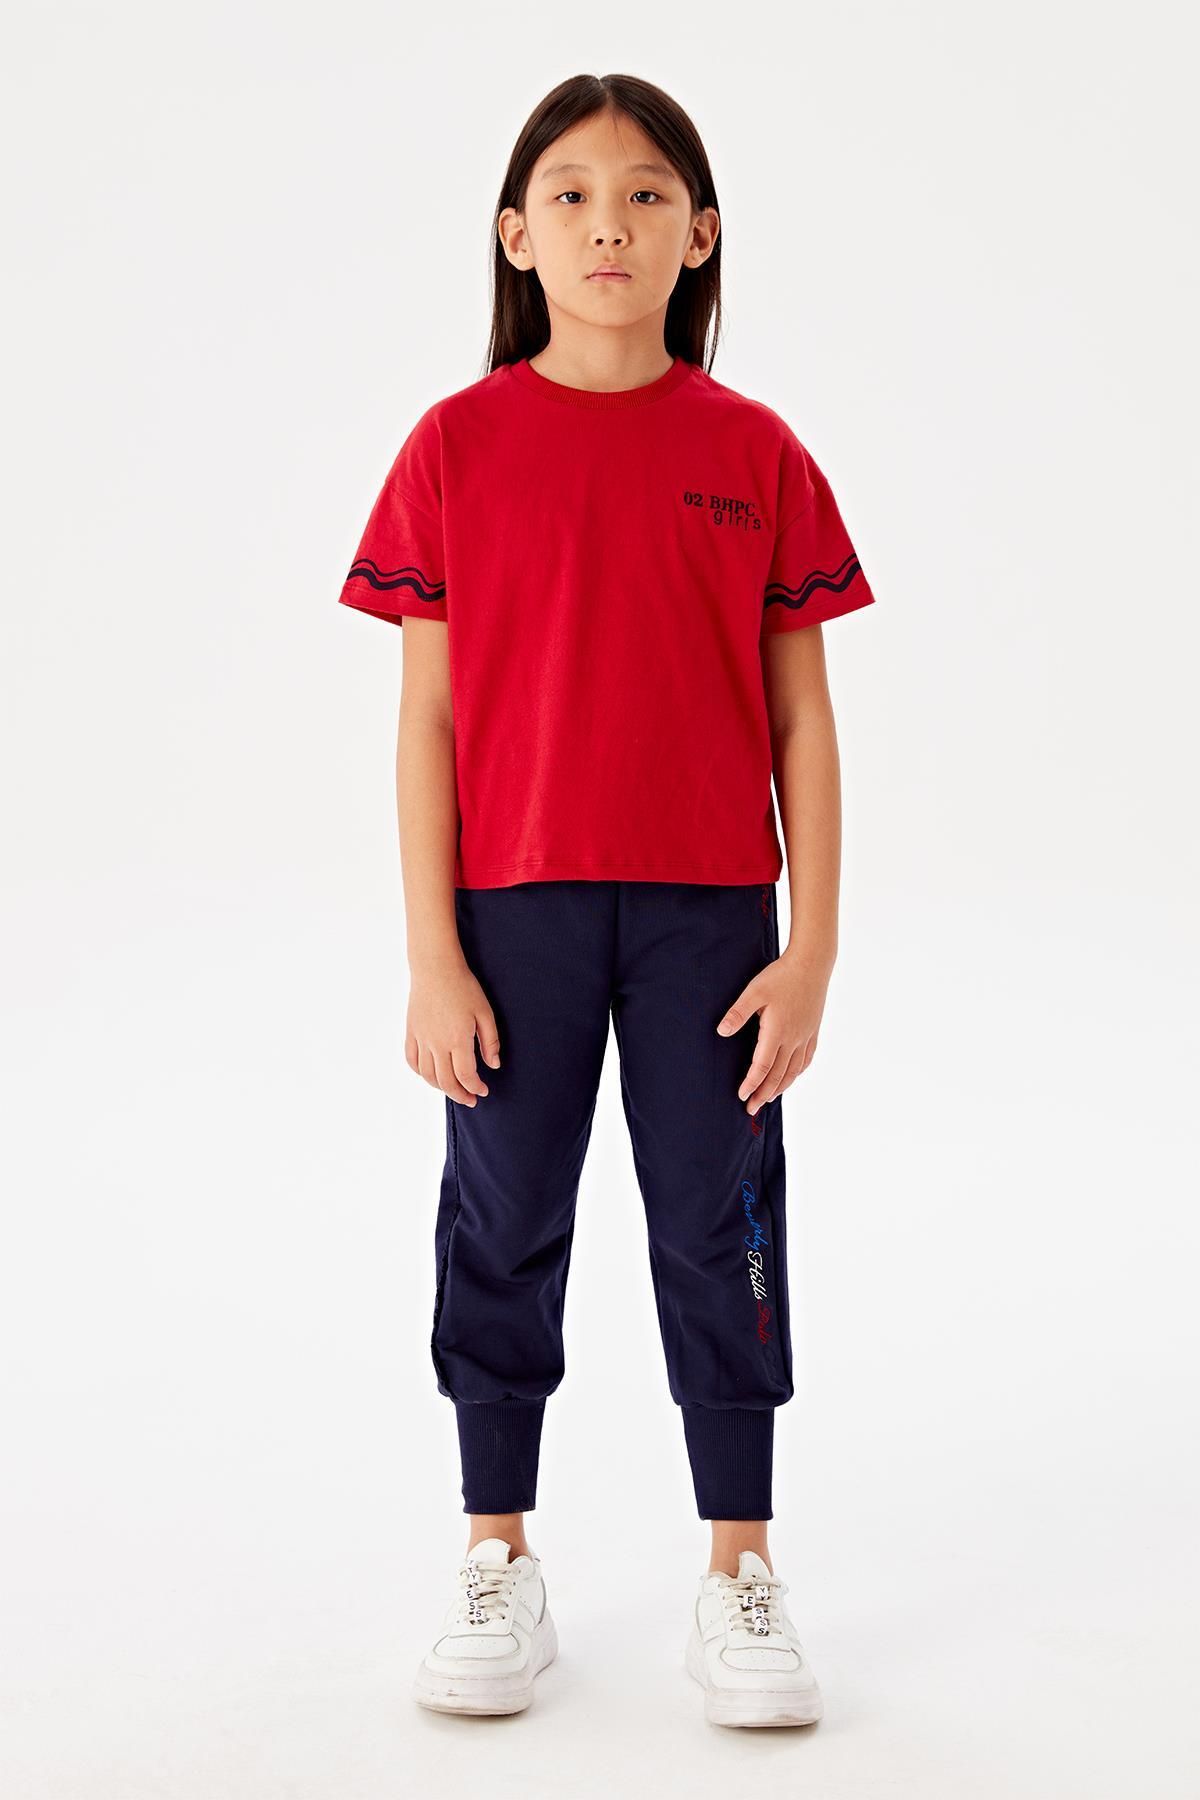 Beverly Hills Polo Club BG Store Kız Çocuk Kırmızı T-Shirt